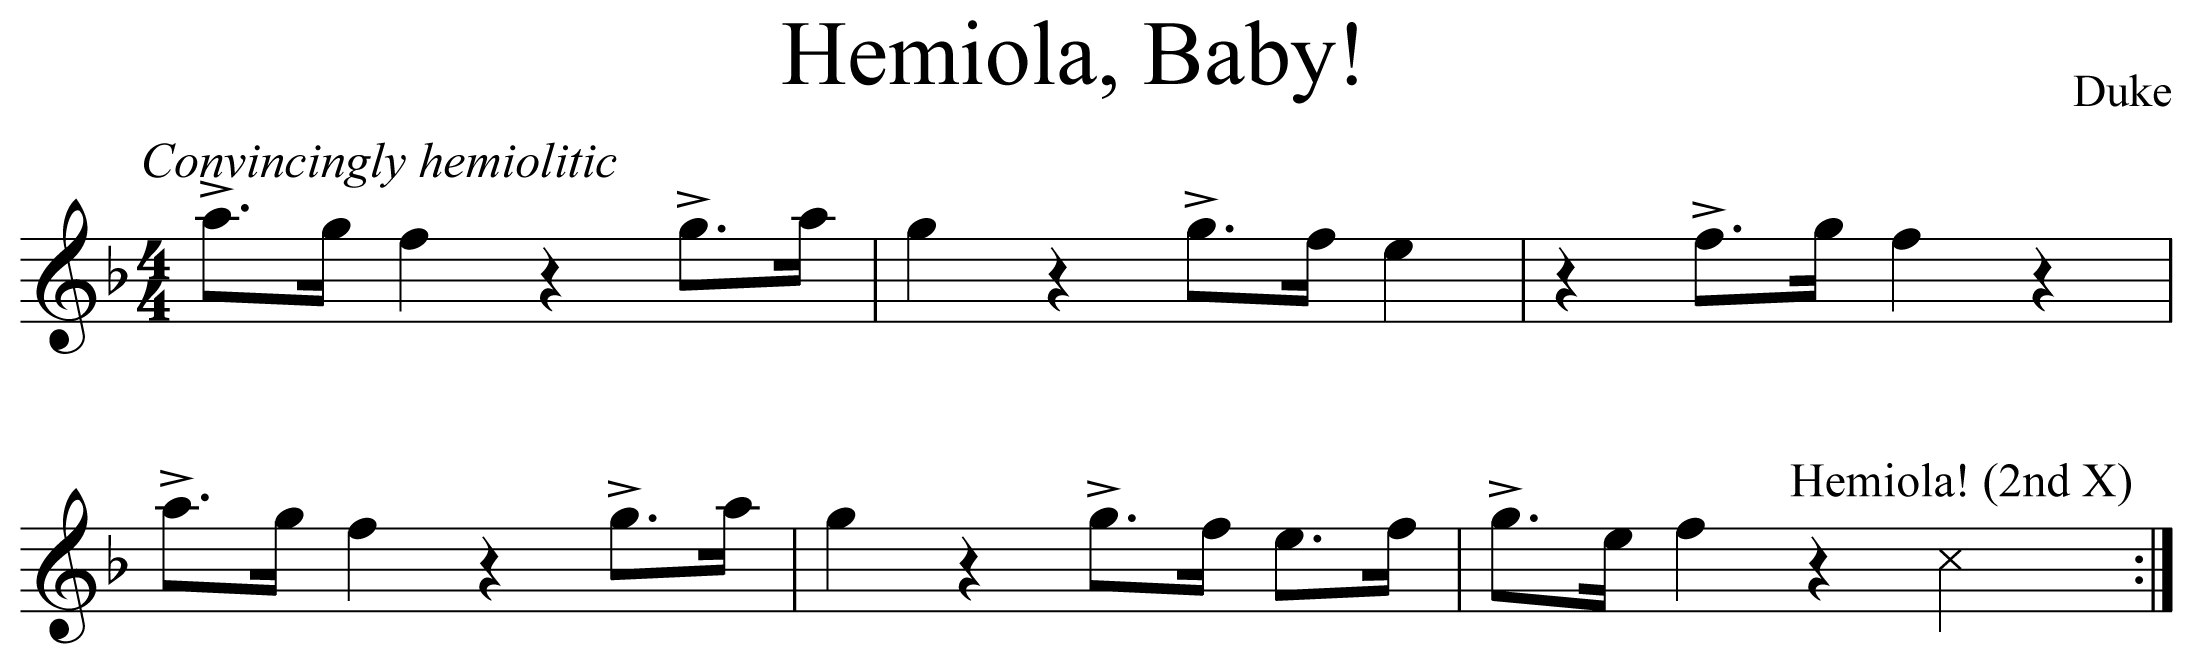 Hemiola, Baby! Notation Flute